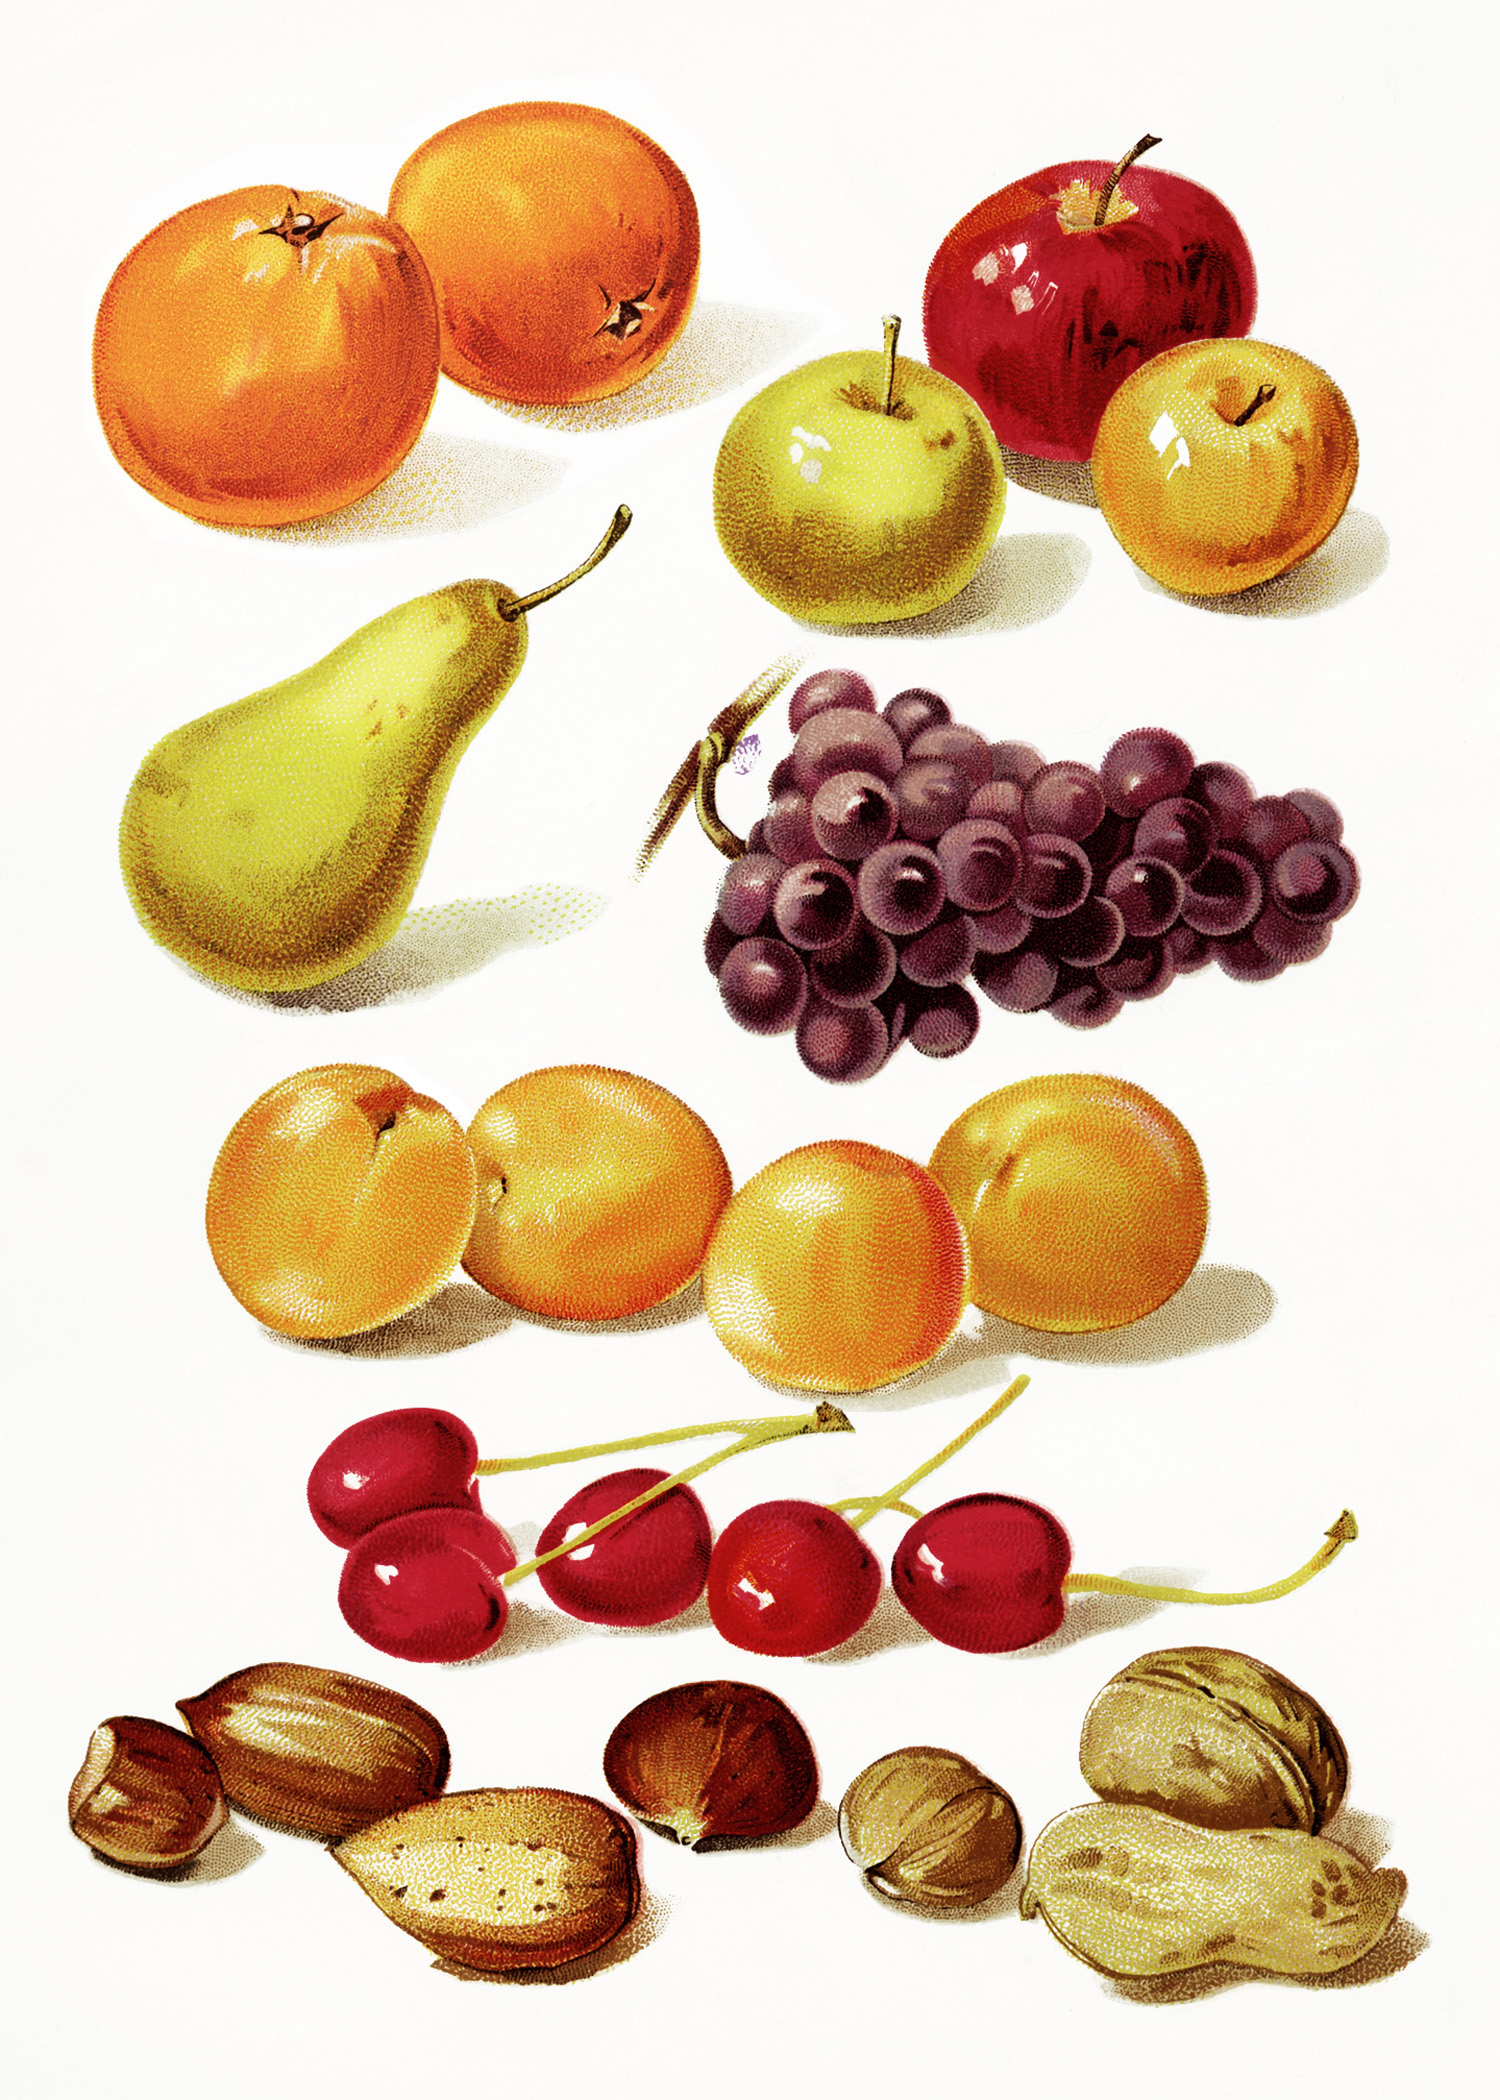 Page of Fruit and Nuts ~ Free Vintage Image | Old Design Shop Blog